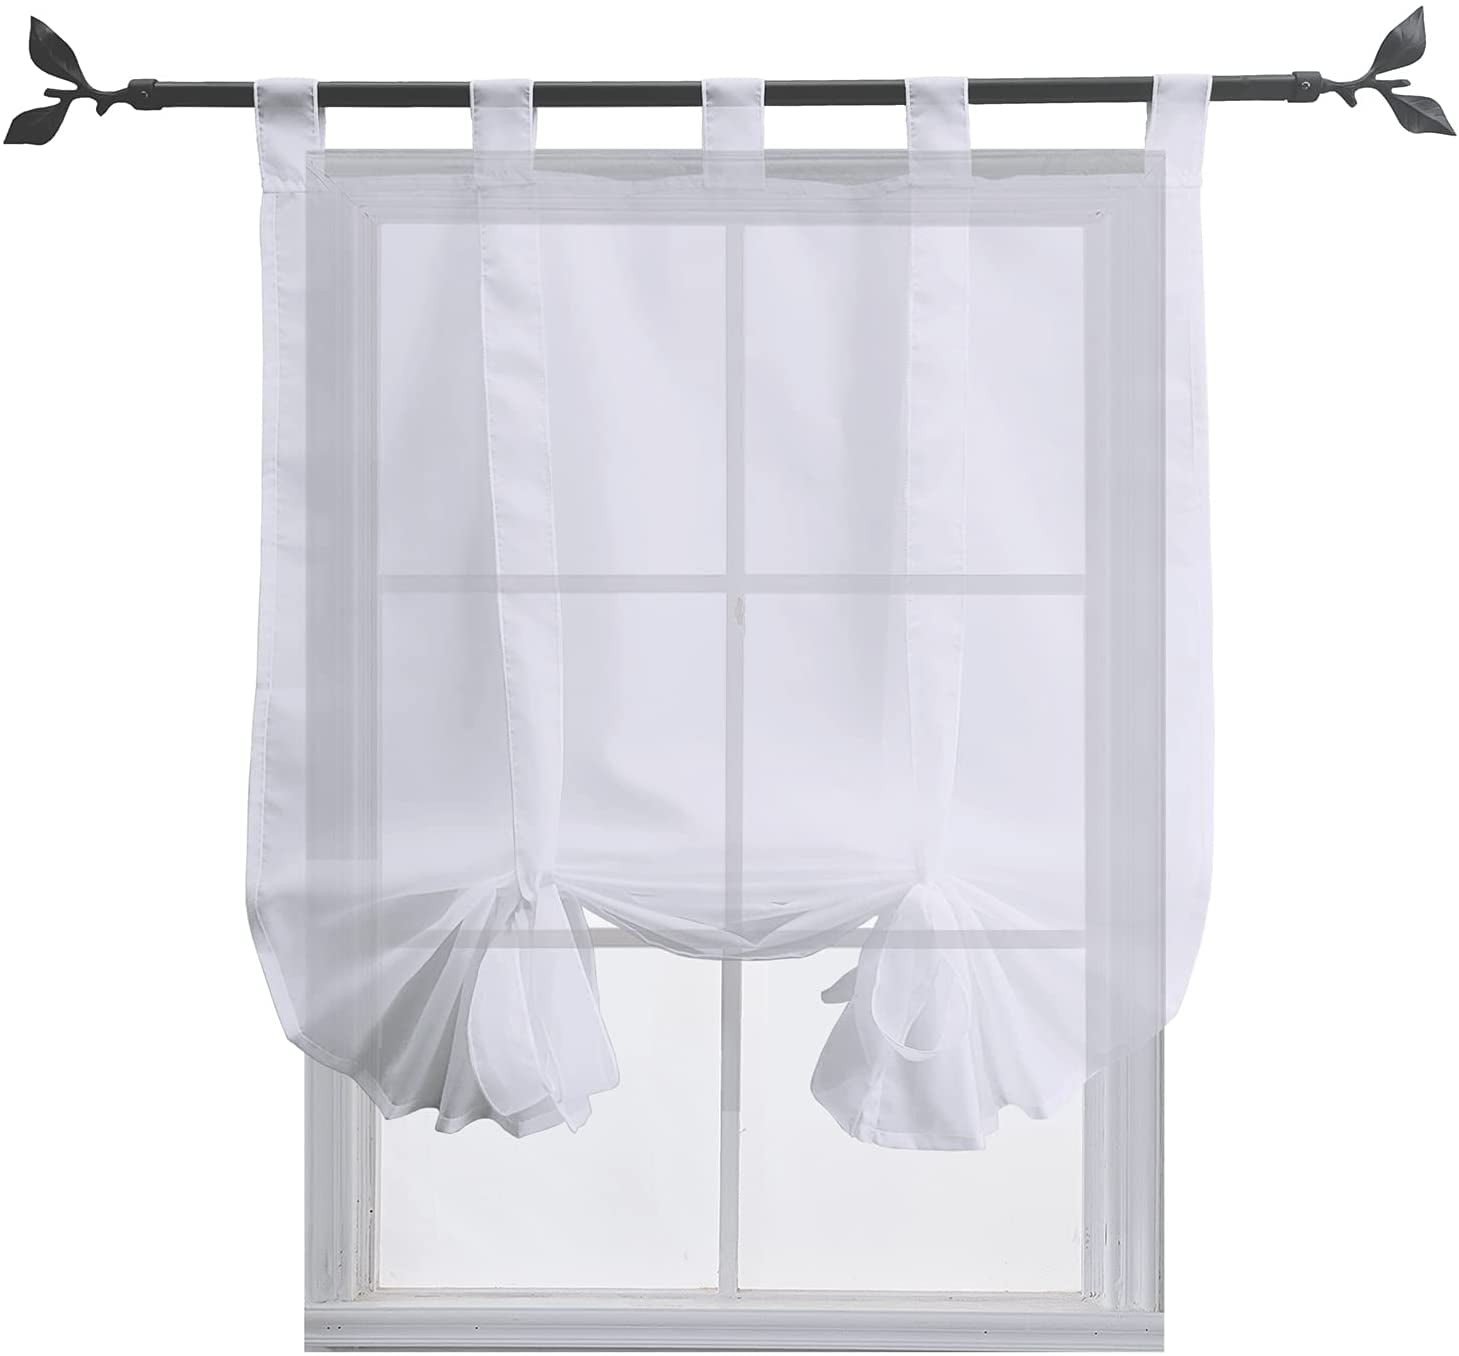 White ZebraSmile Adorable Bowknot Tie Up Roman Curtain Lifable Voile Tab Top Balloon Curtain Semi Sheer Kitchen Balloon Window Curtain 39 x 55 Inch 